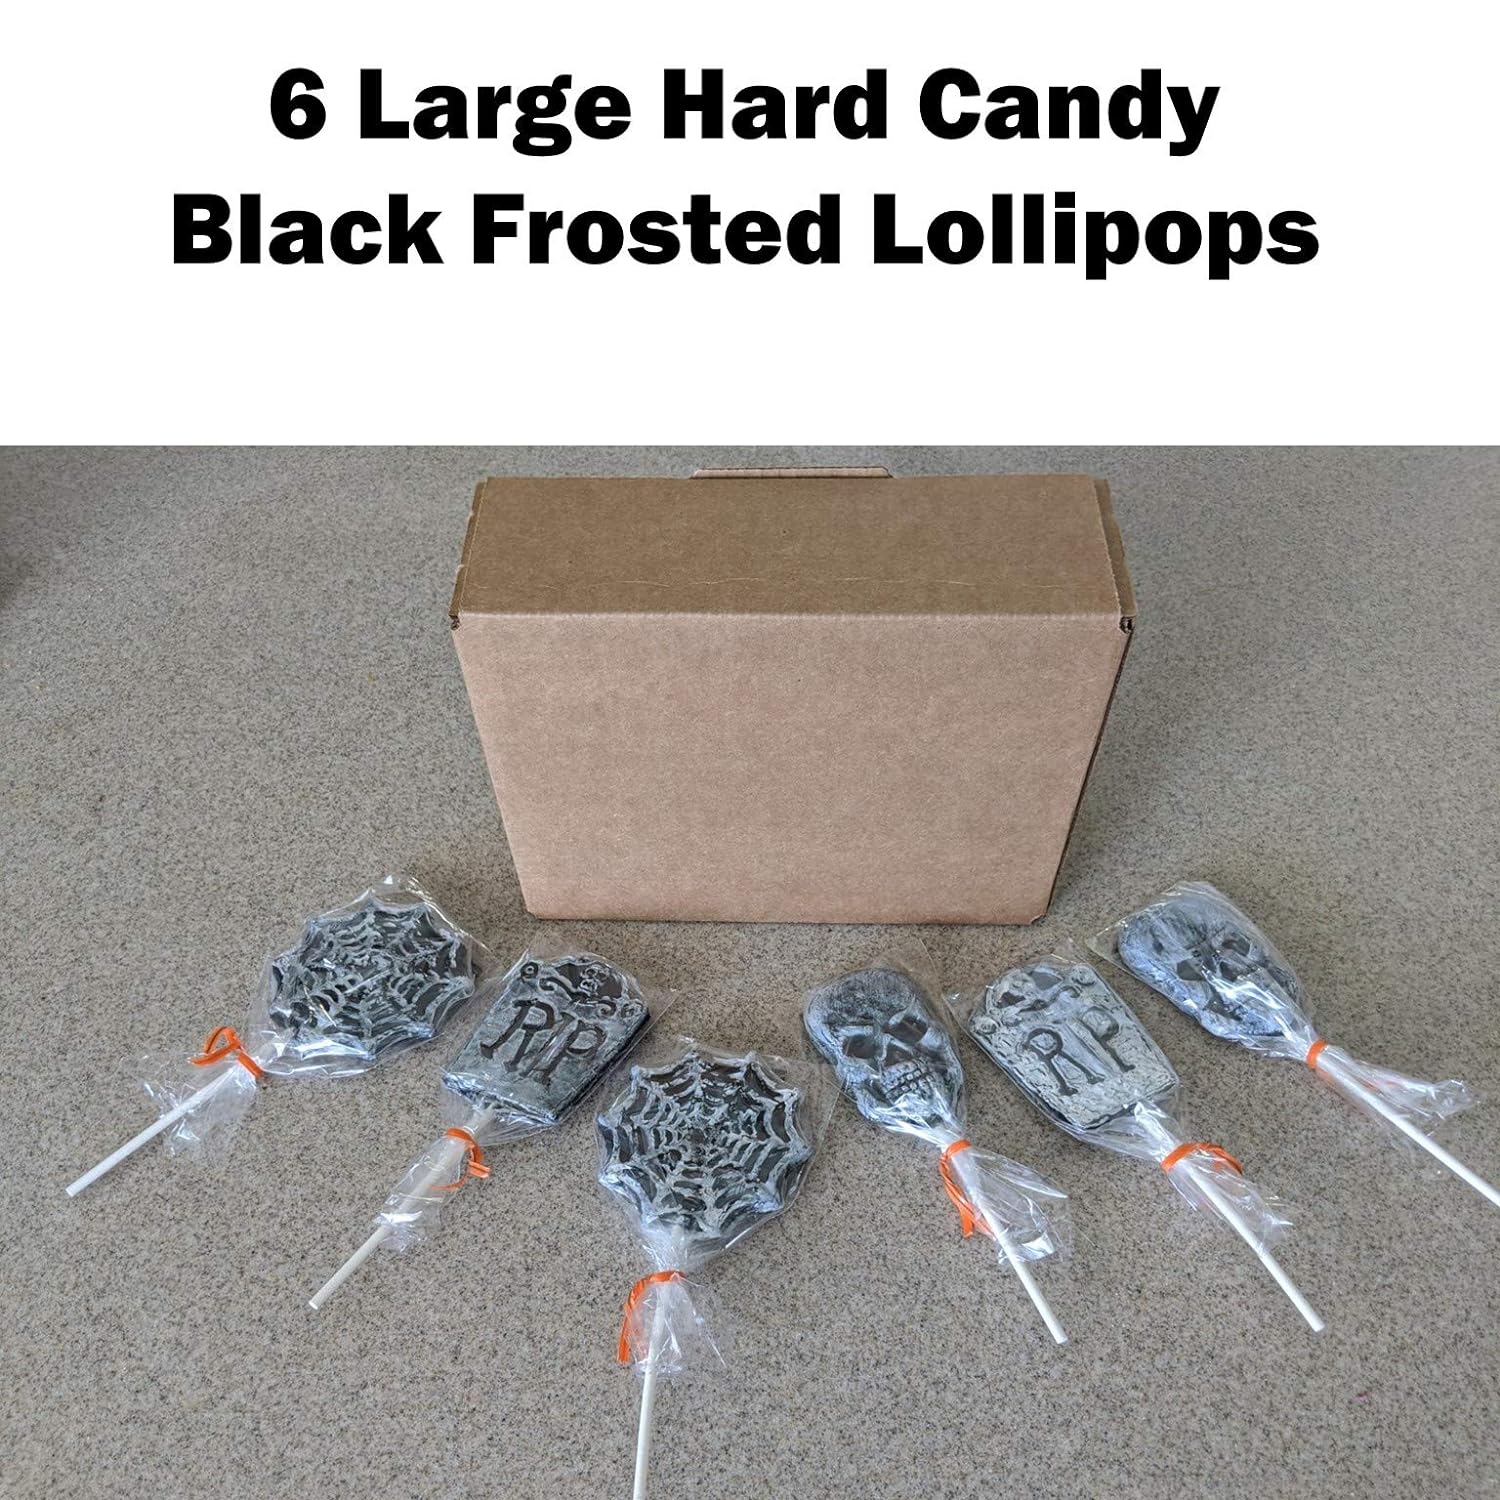  Snack Fun Halloween-Themed Spooky Lollipops (12 Pack) Great for Halloween Goody Bag Fillers | Spider Web Skull RIP Lollipop Suckers